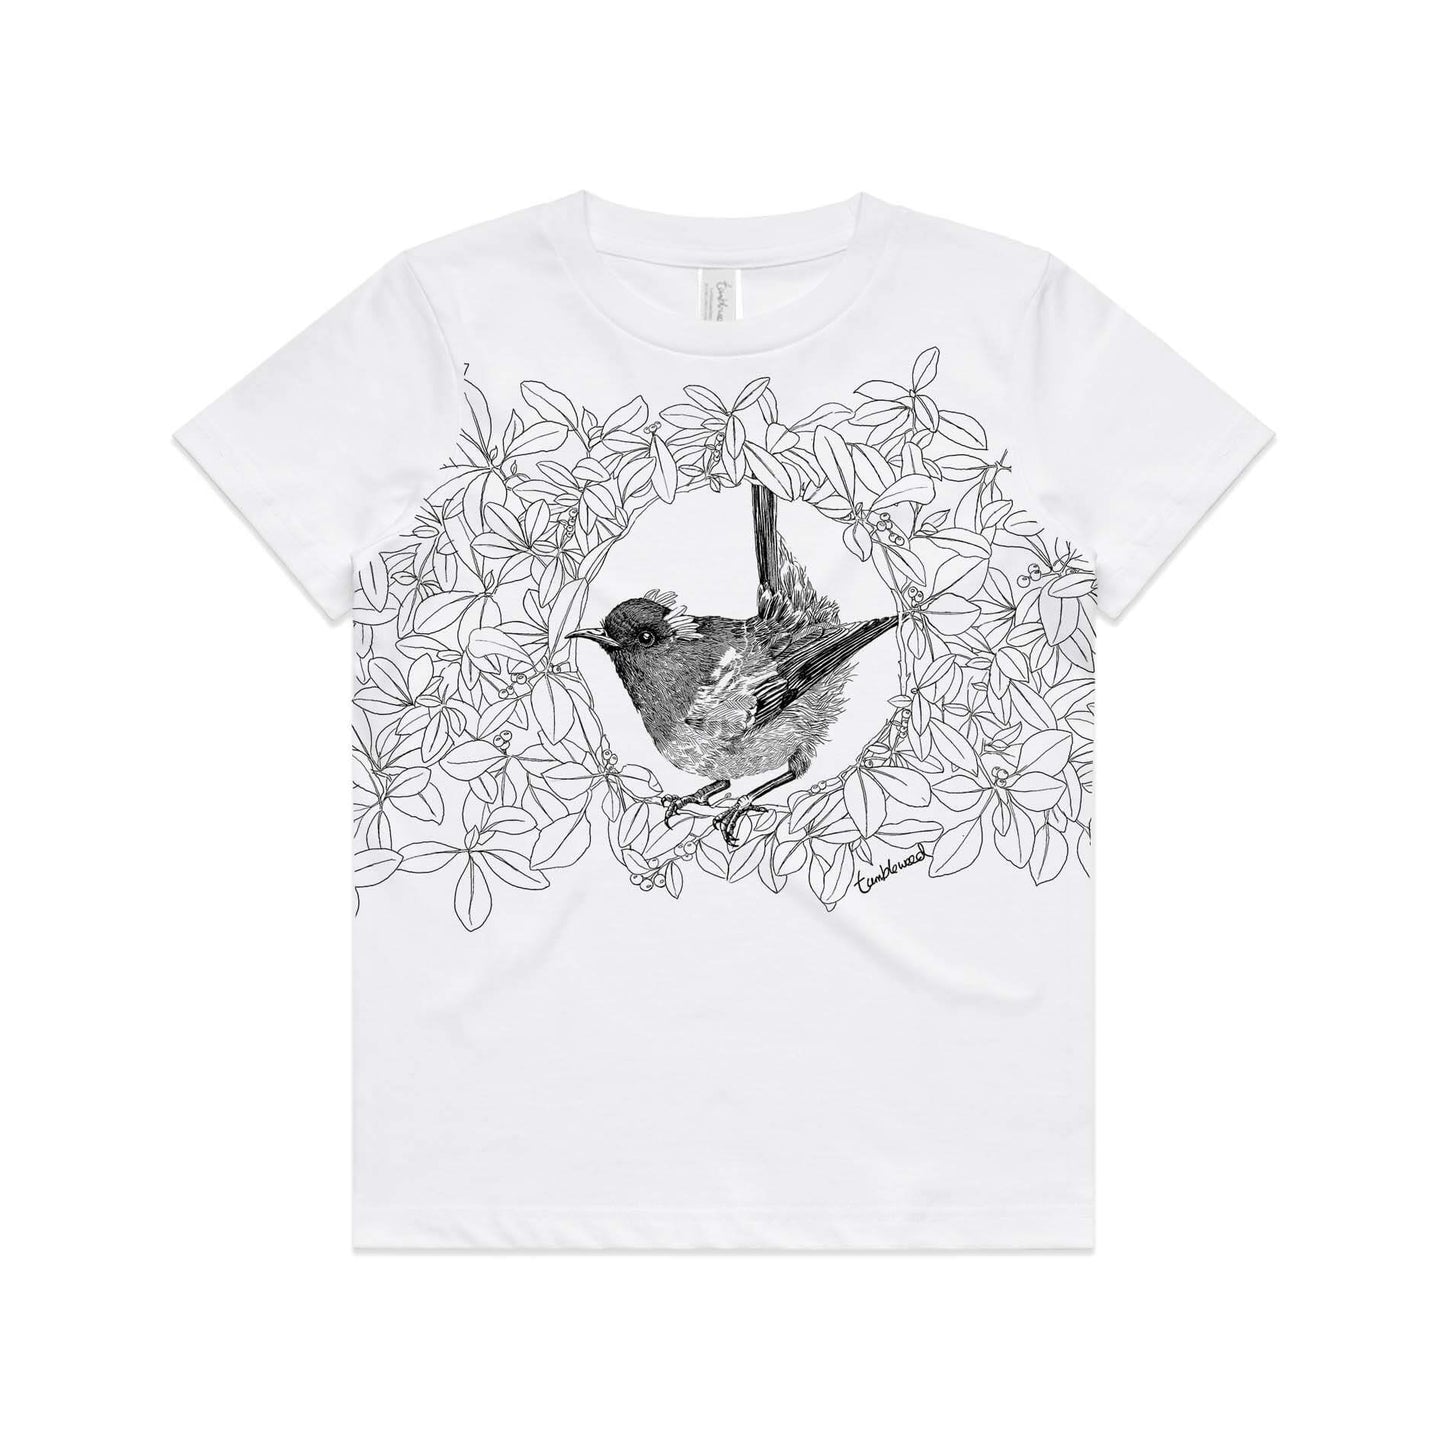 White, cotton kids' t-shirt with screen printed Kids hihi/stitchbird design.